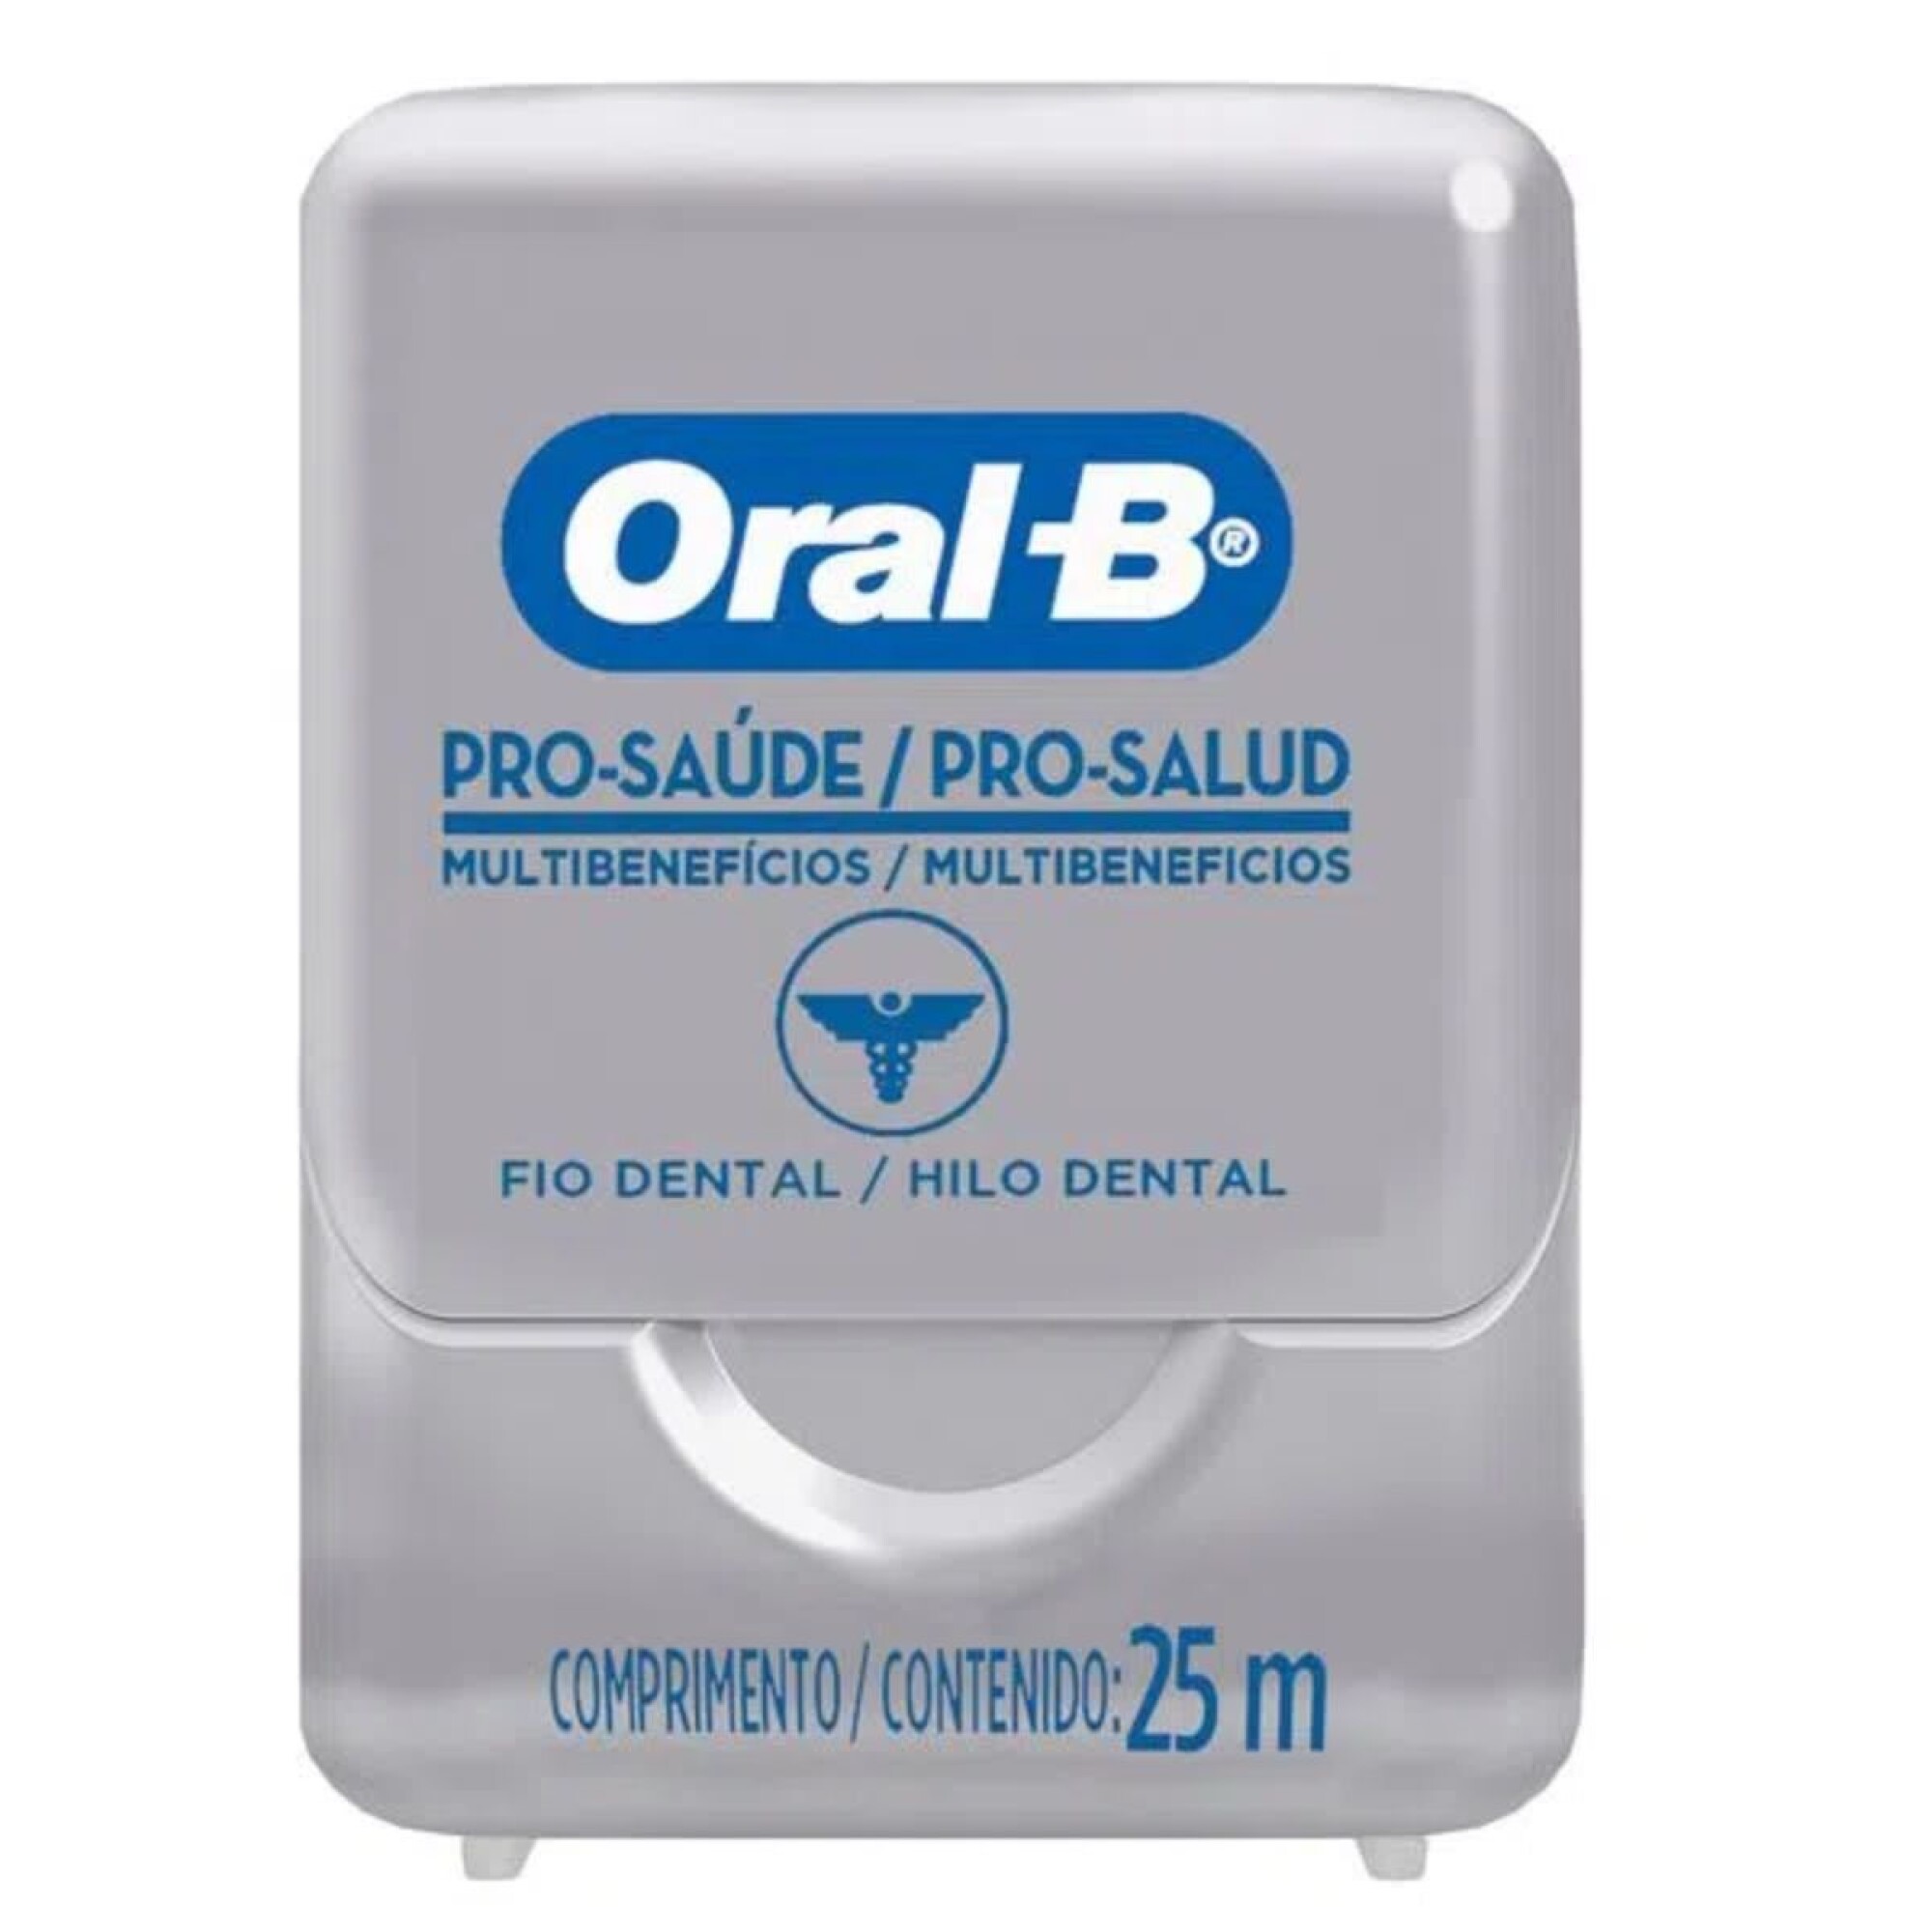 Hilo Dental Oral-B Expert 25 m